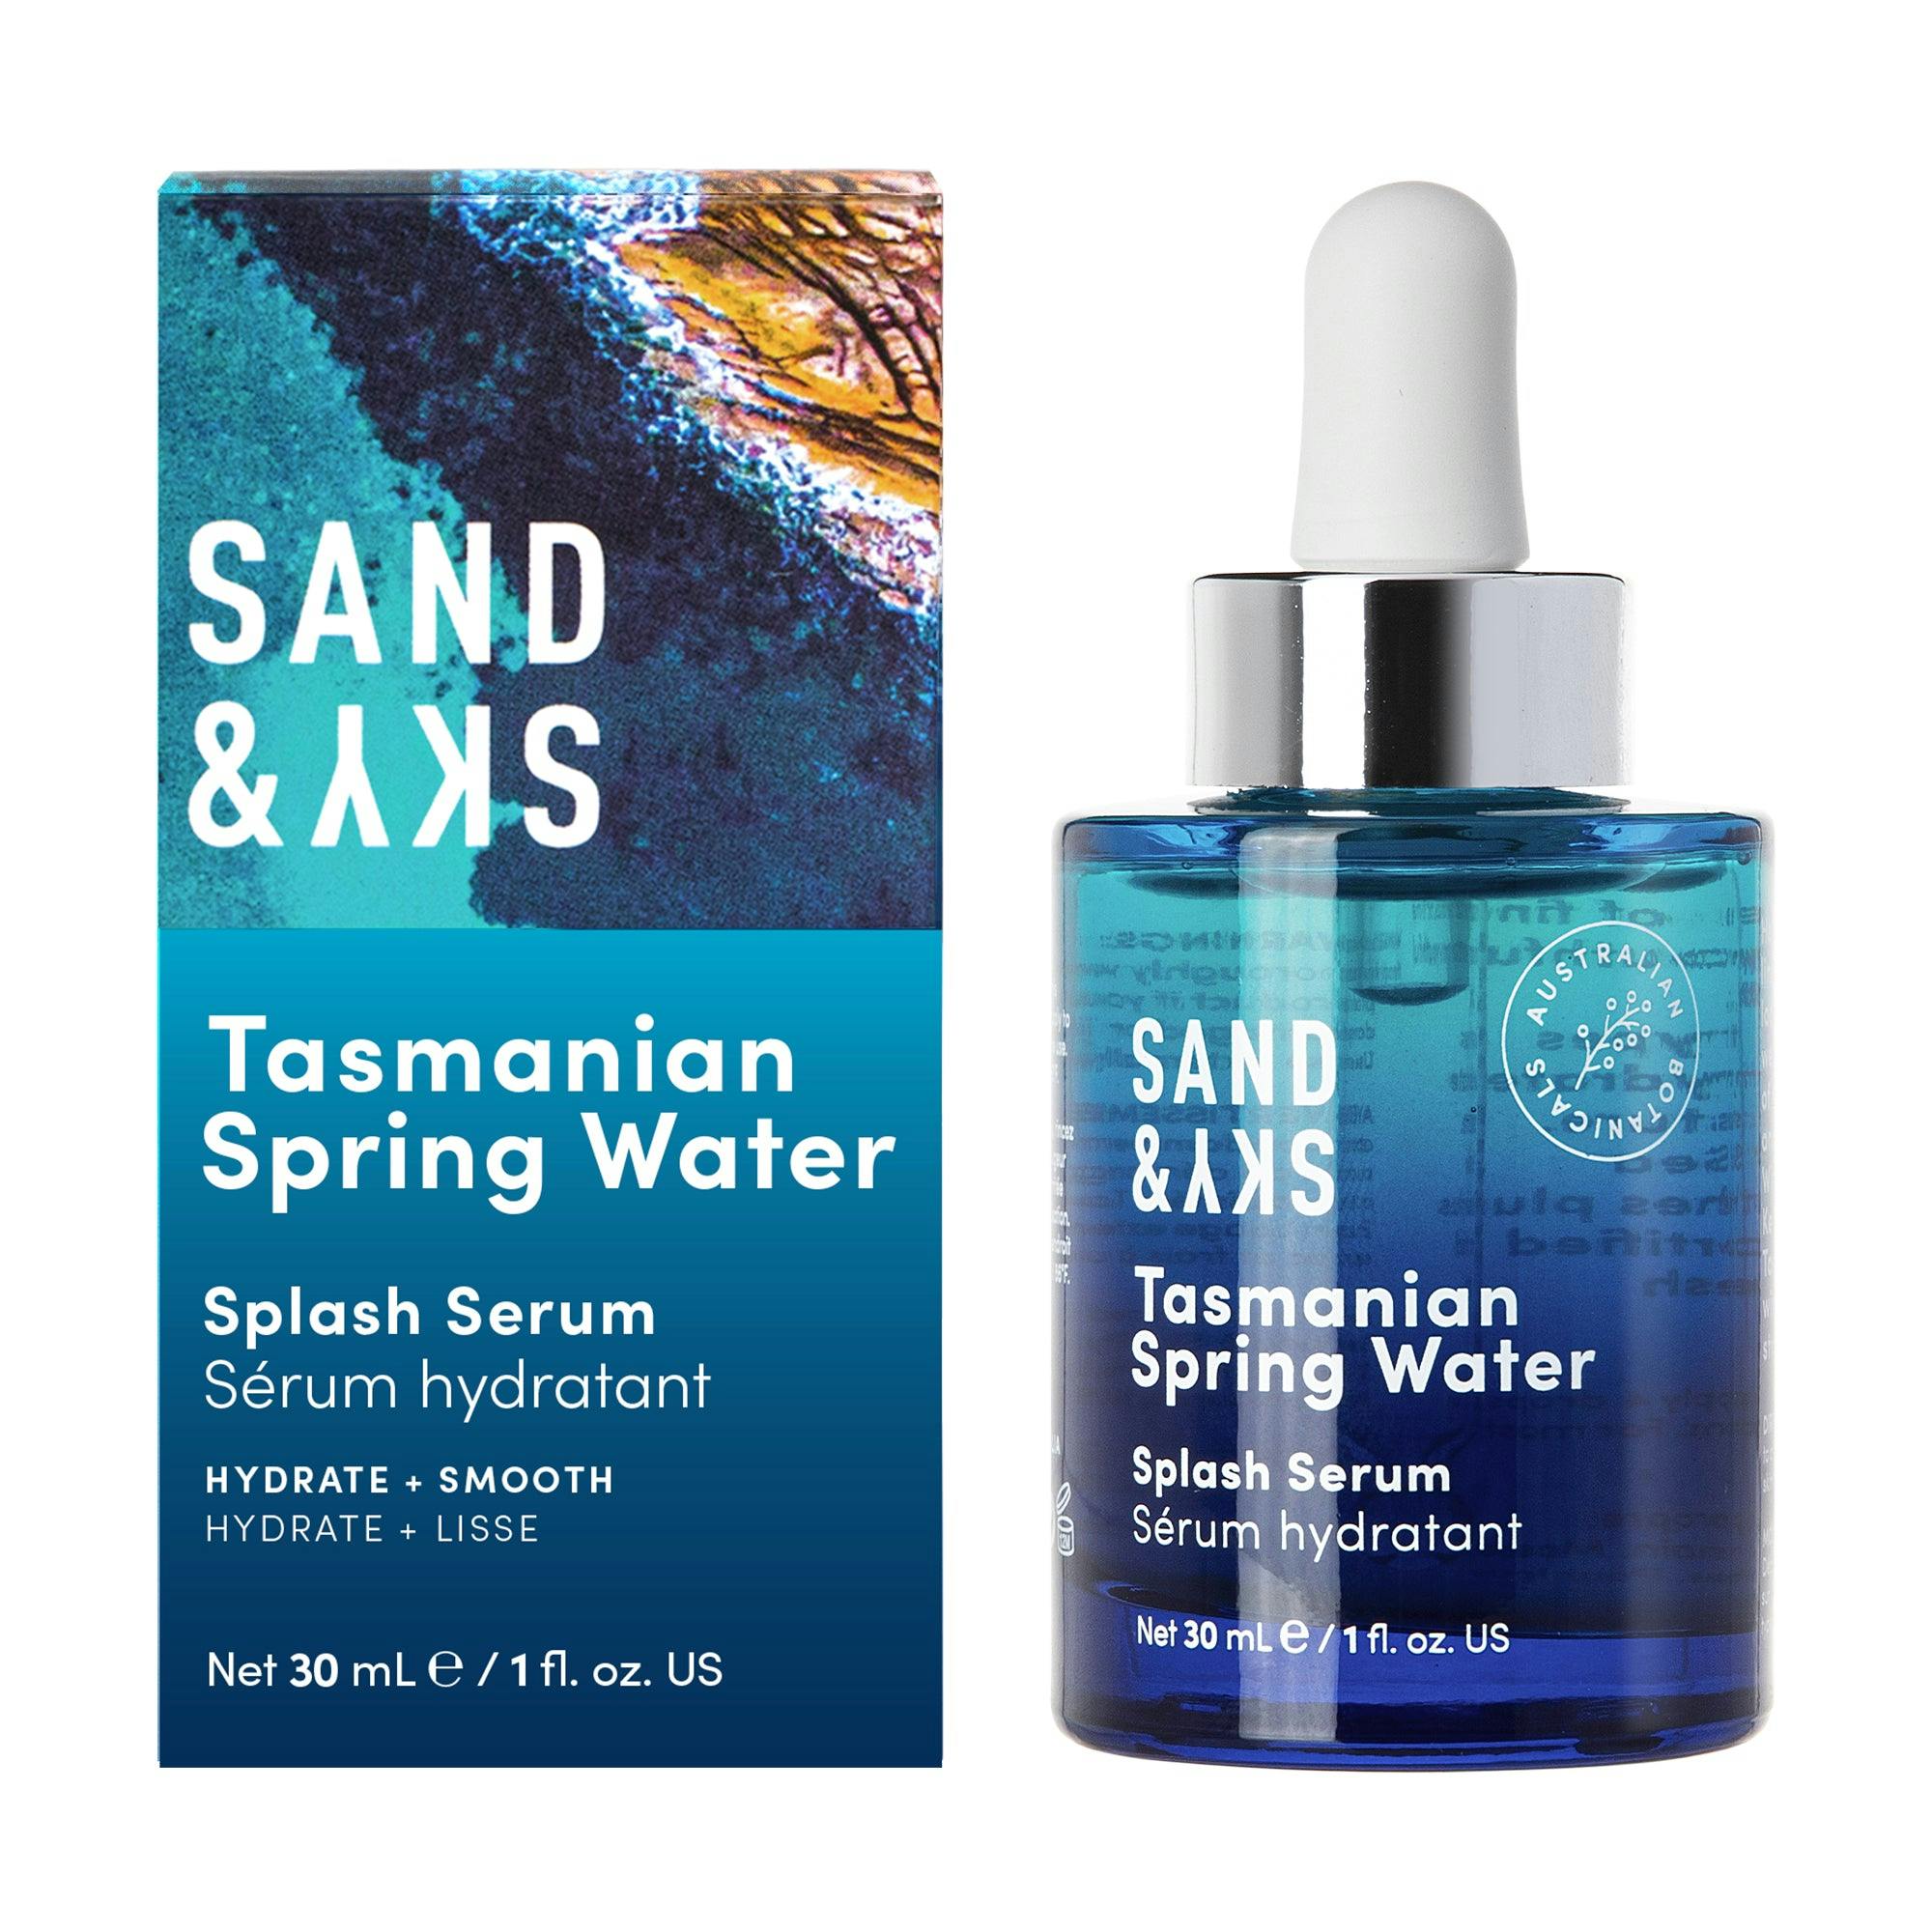 Sand & Sky Tasmanian Spring Water Splash Serum 30ml